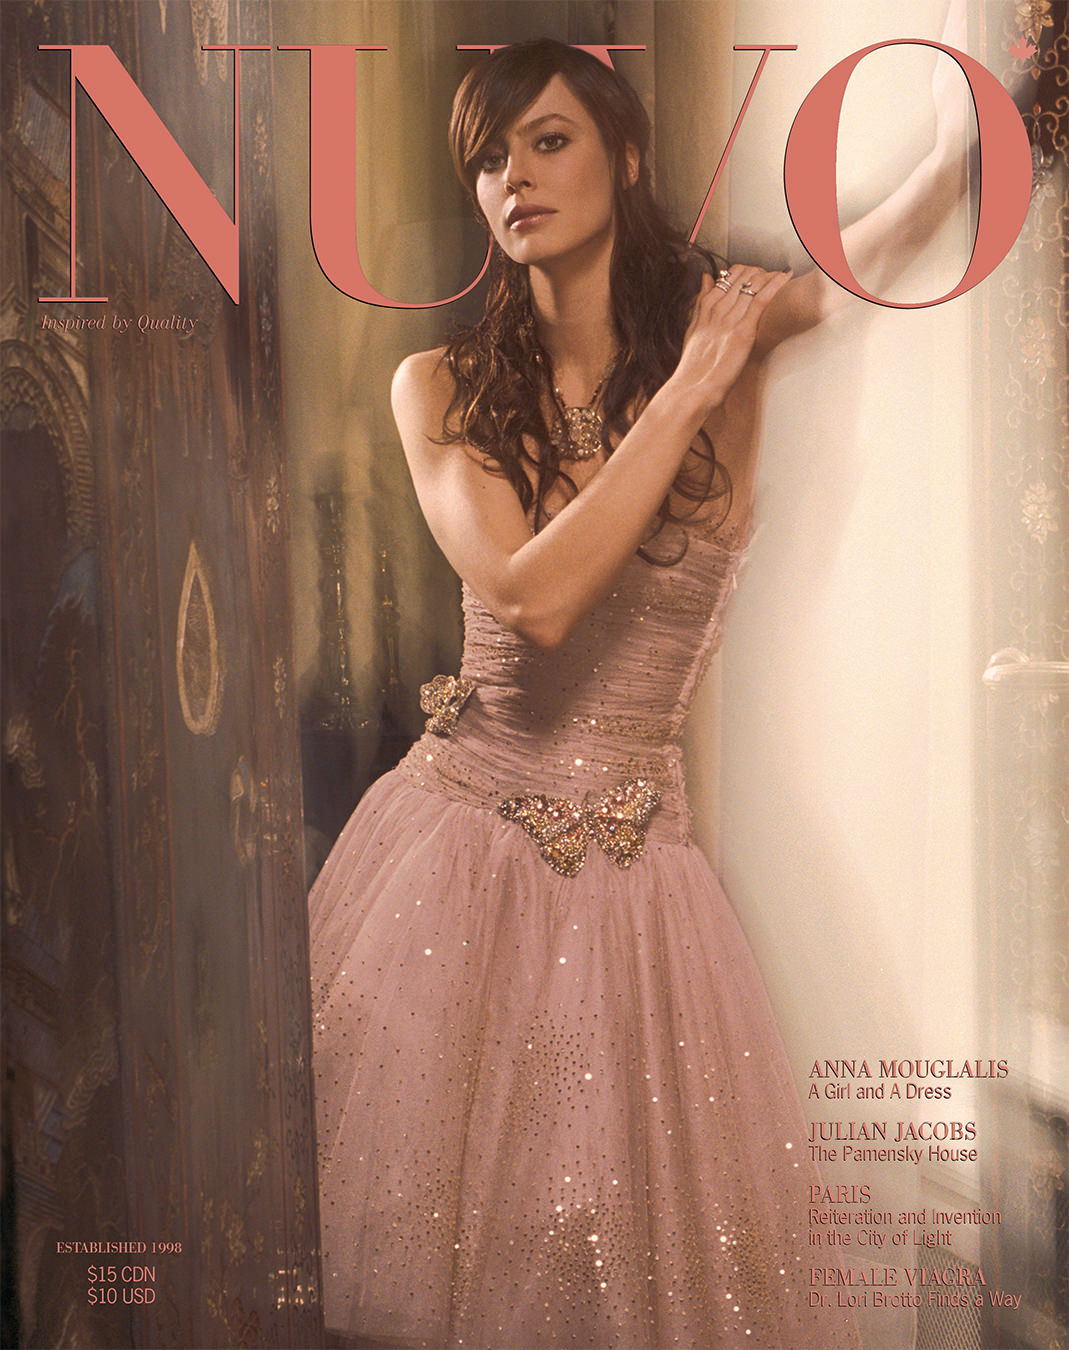 NUVO Magazine Summer 2003 Cover featuring Anna Mouglalis